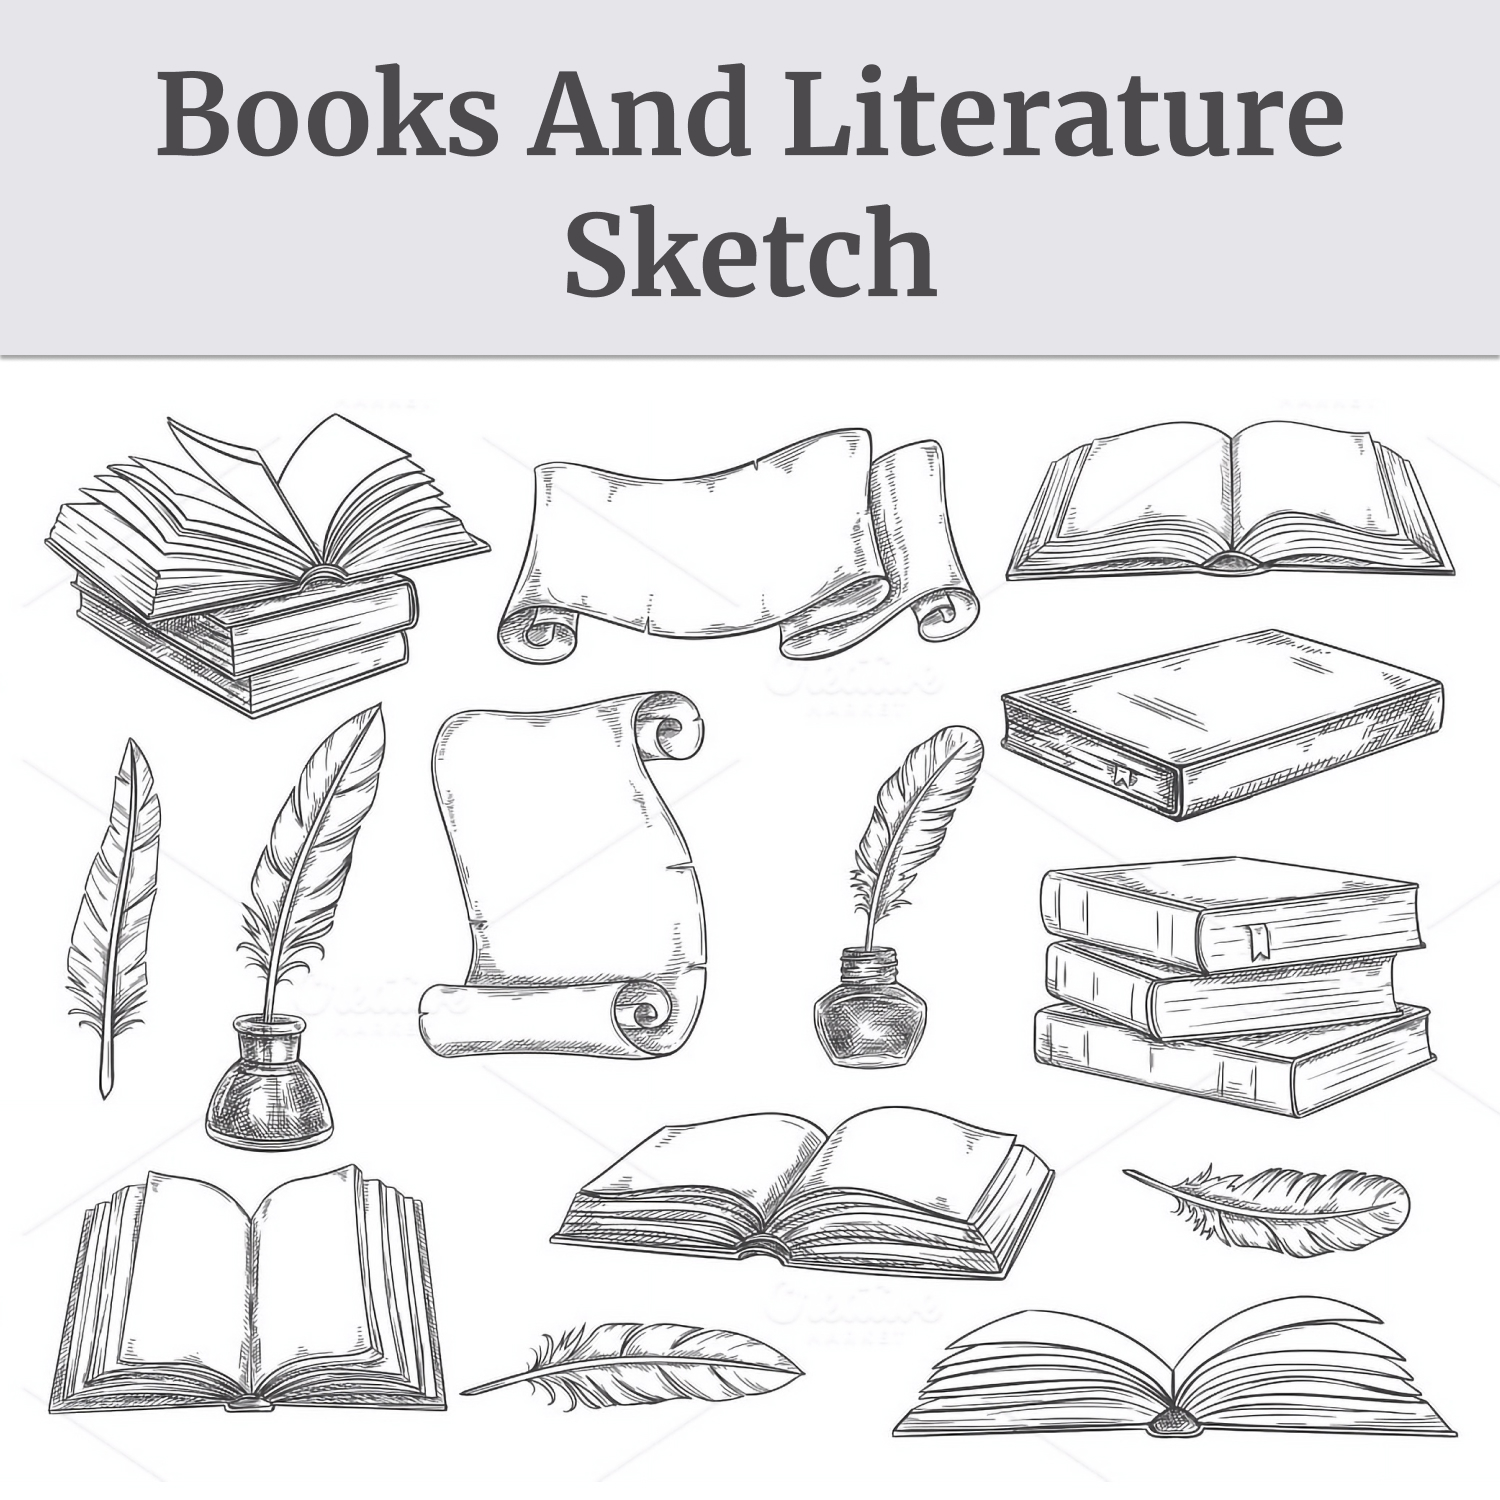 Books and literature quills sketch